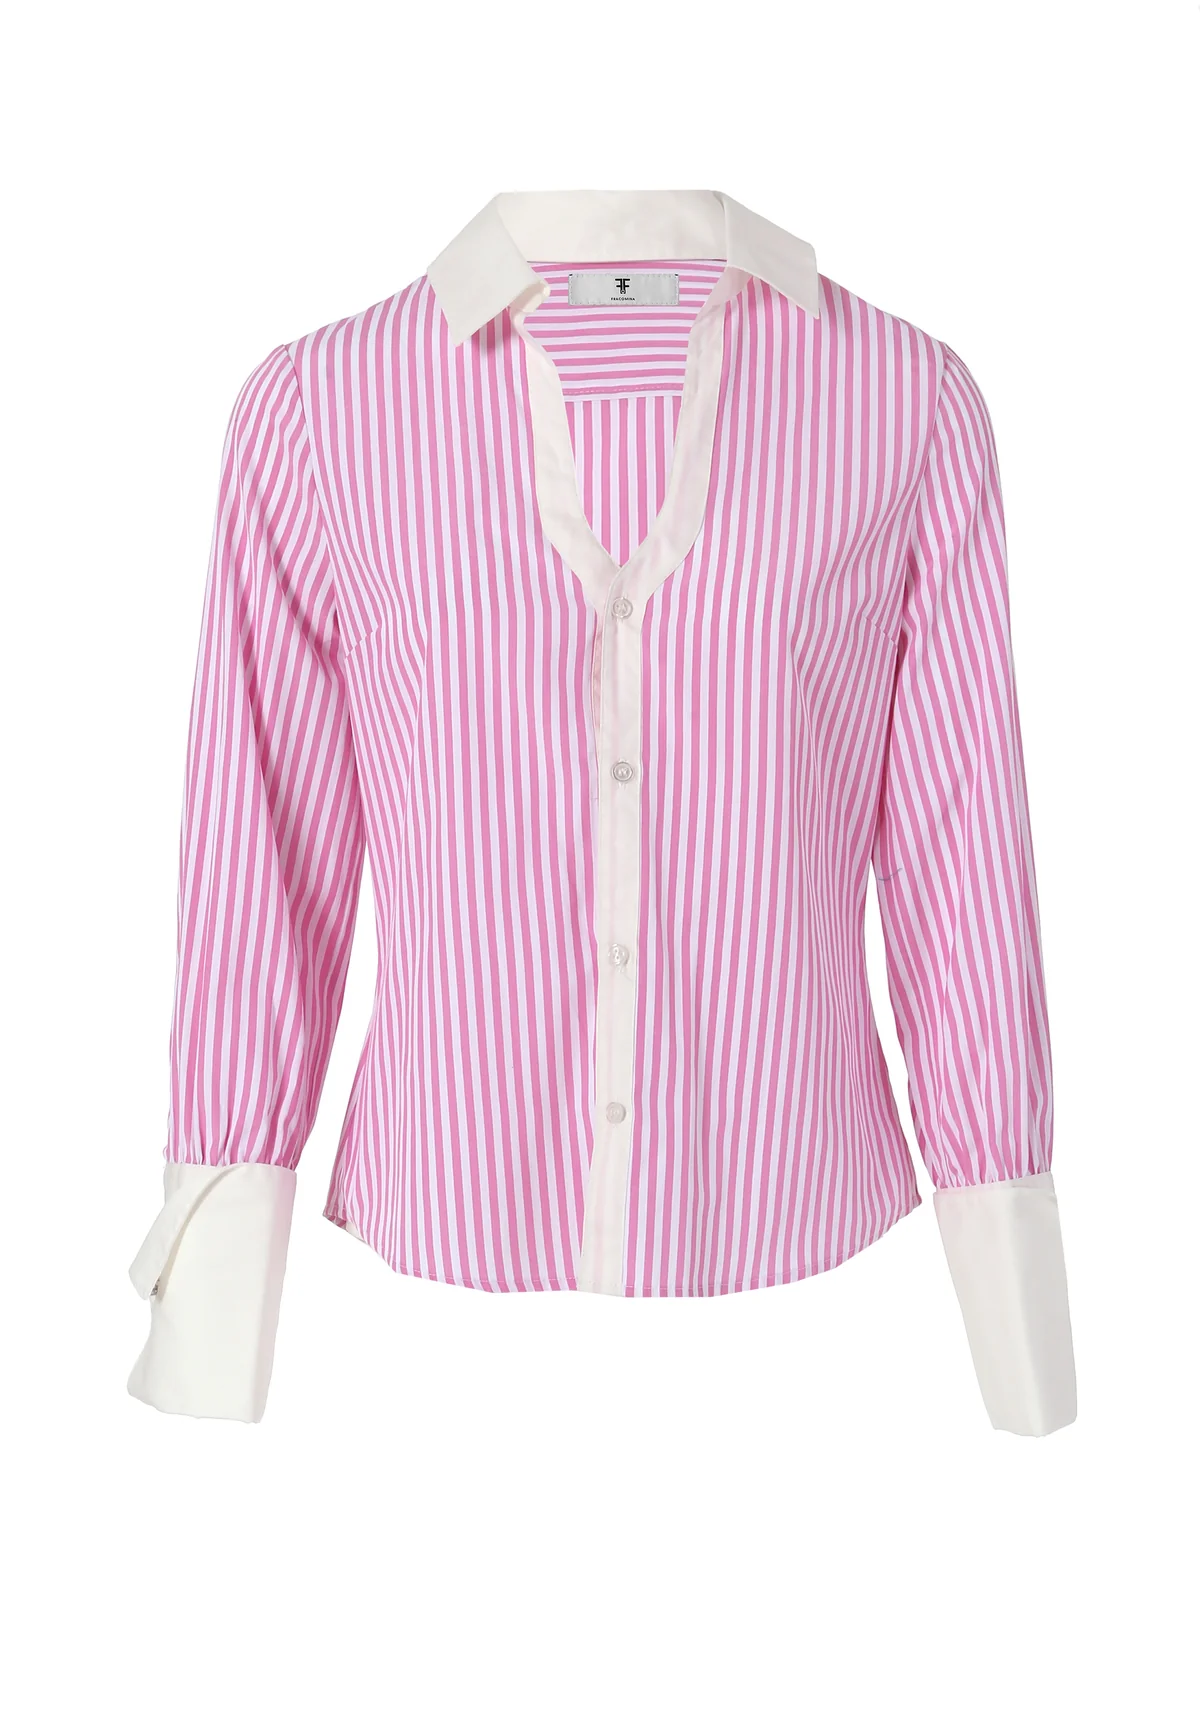 FRACOMINA camisa en rayas rosa y blanco